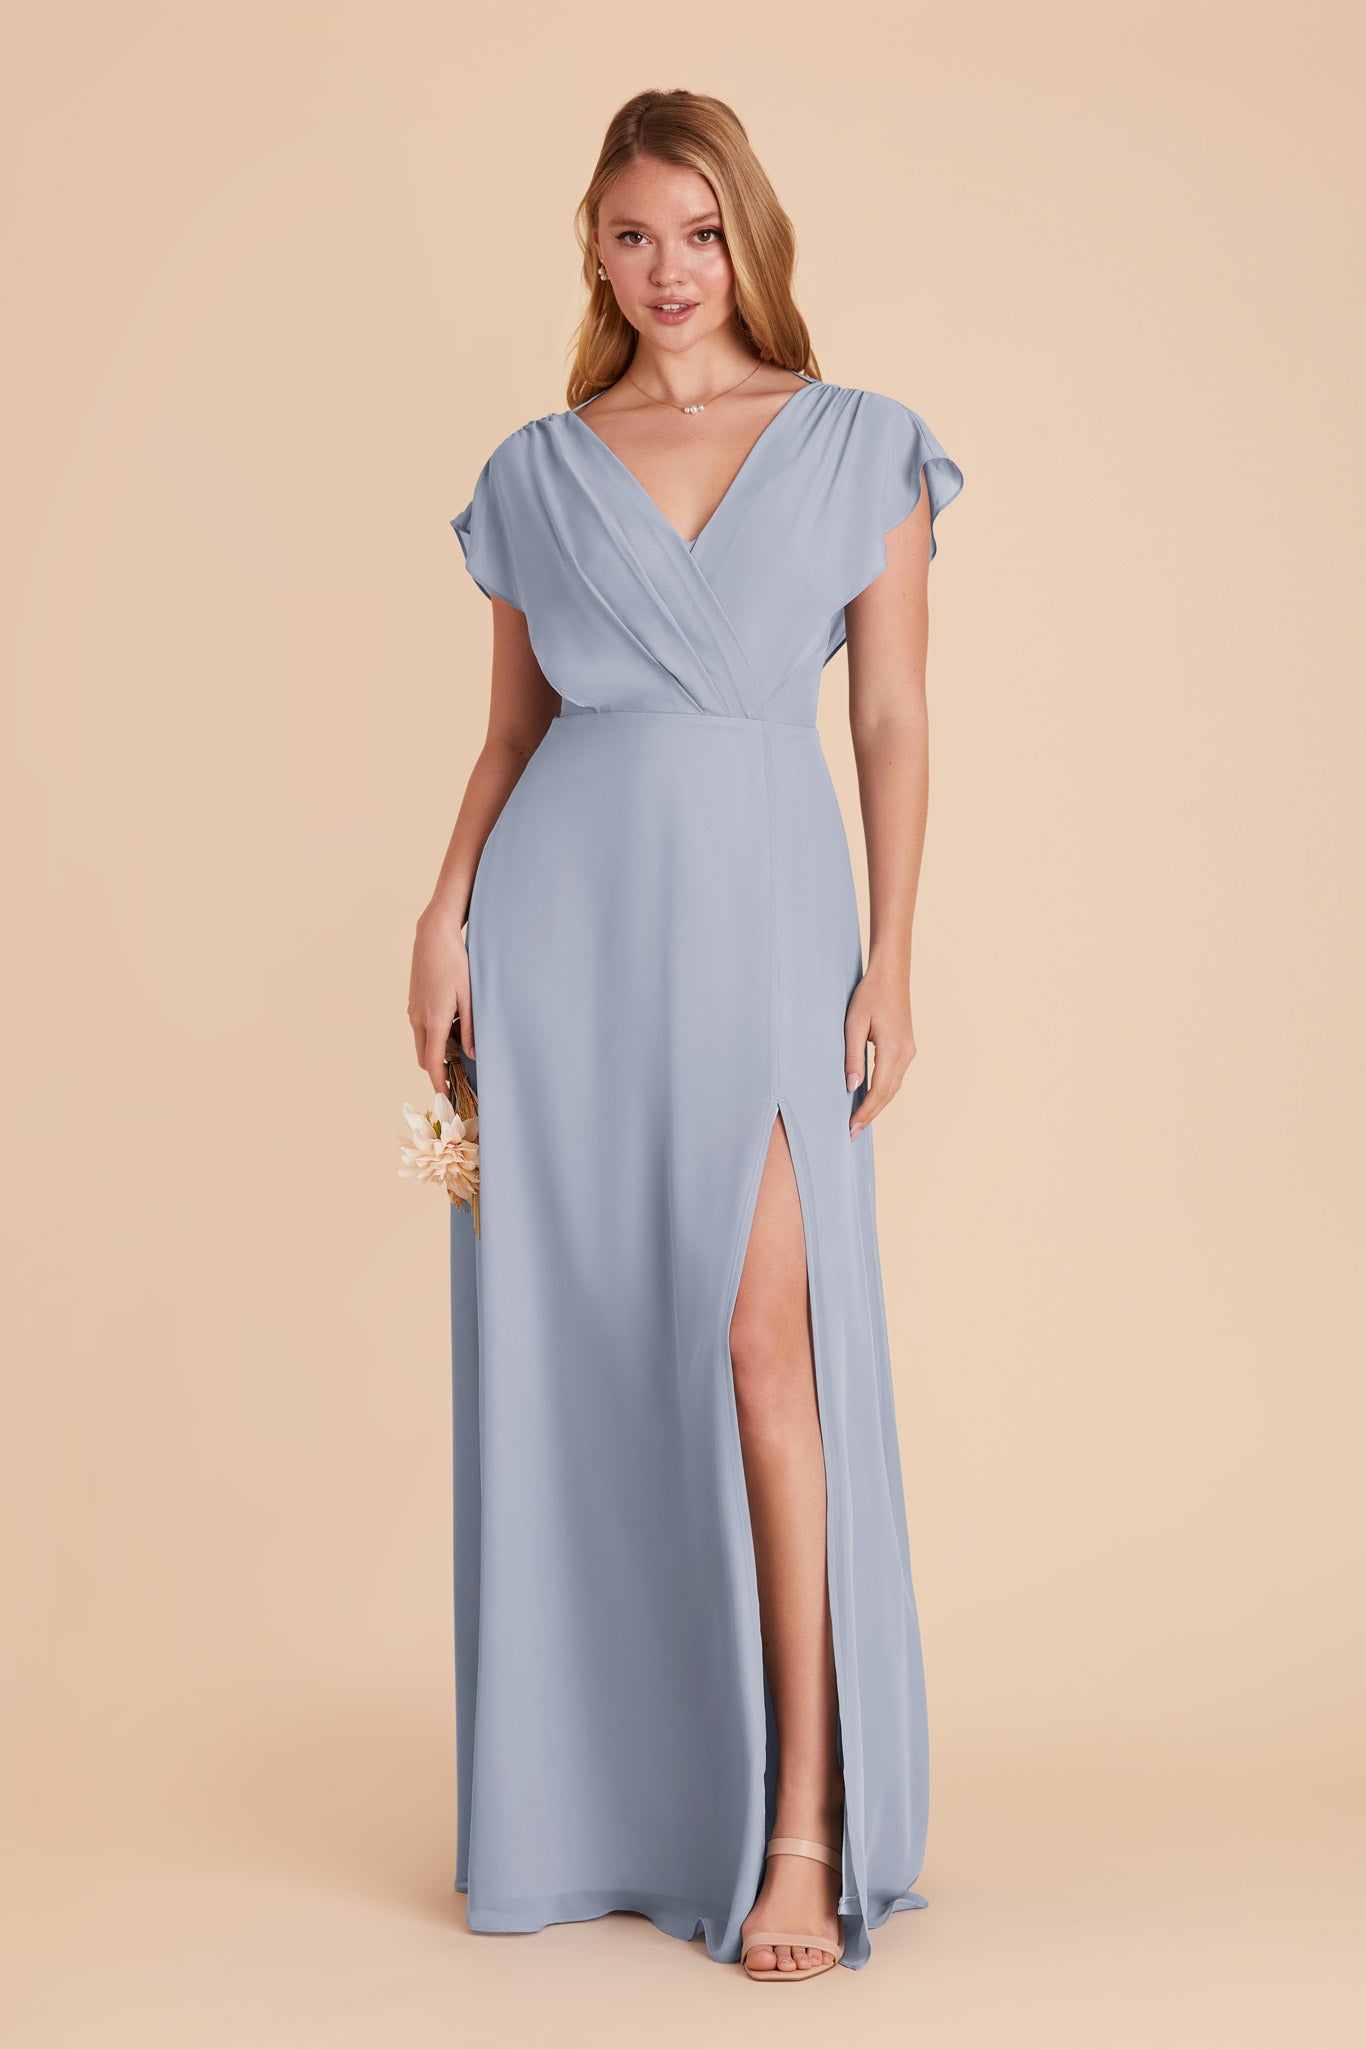 Violet Chiffon Dress - Dusty Blue